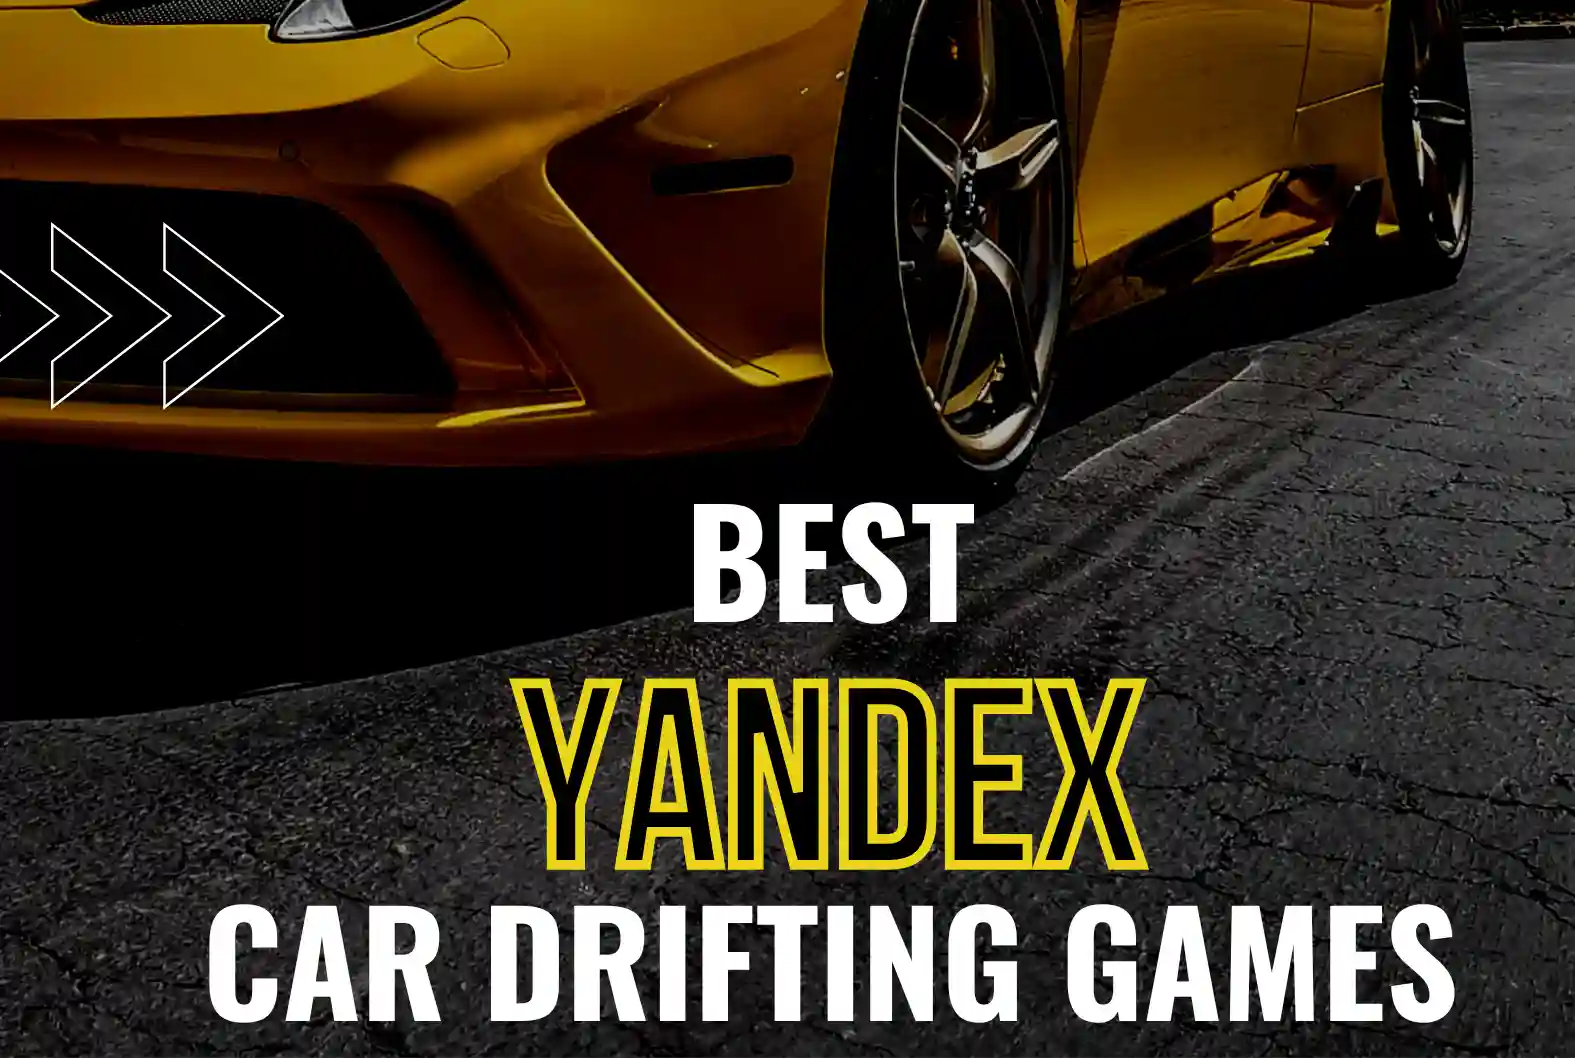 The Best Yandex Car Drifting Games